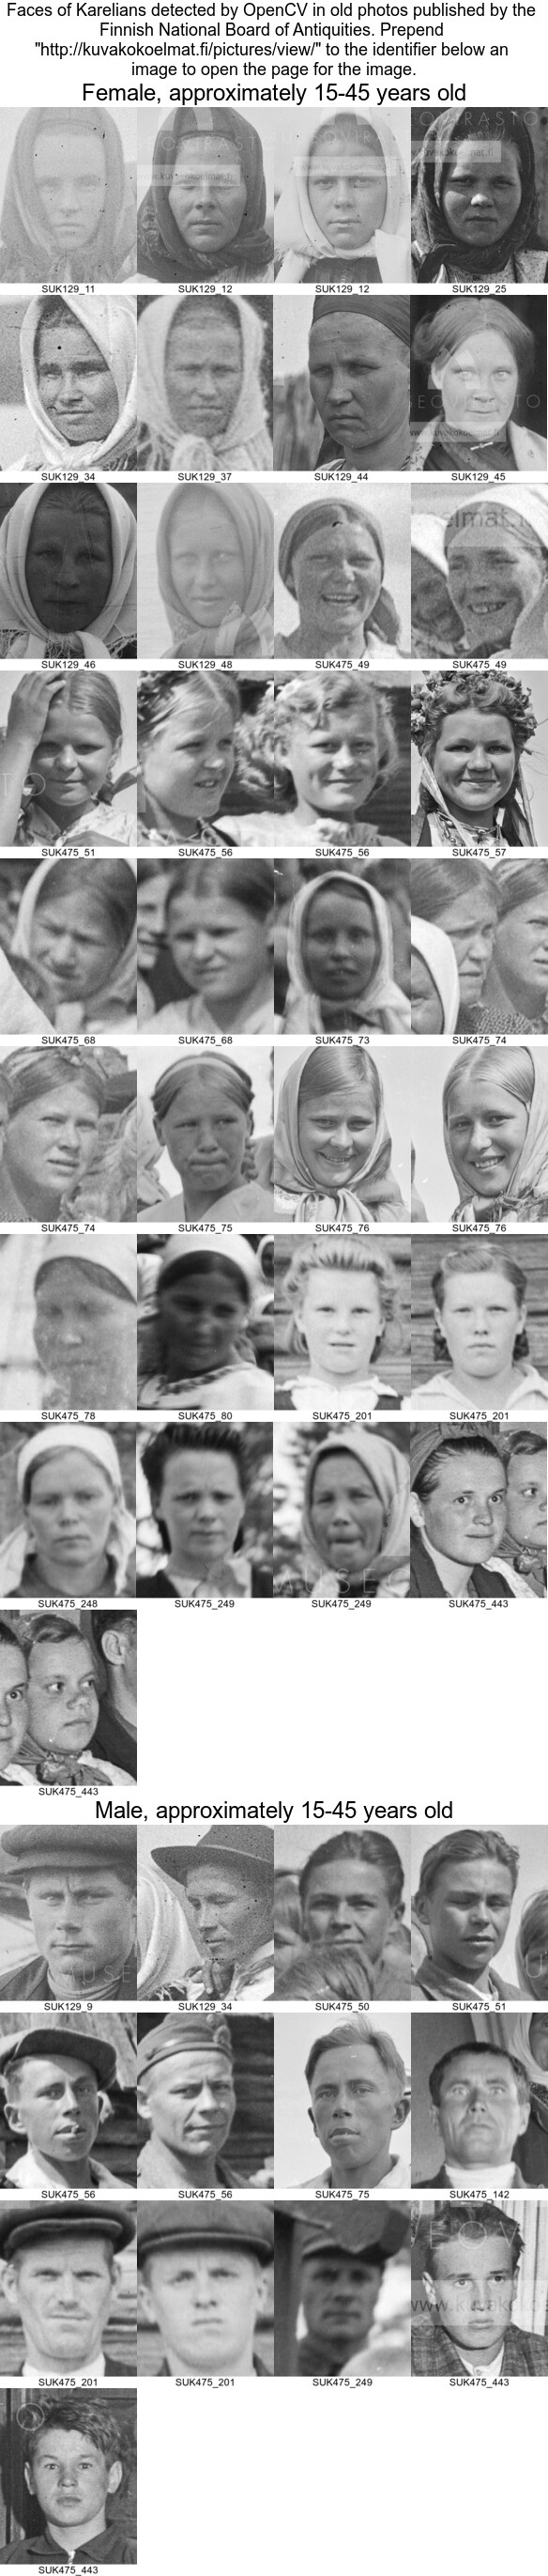 faces-of-karelians.jpg